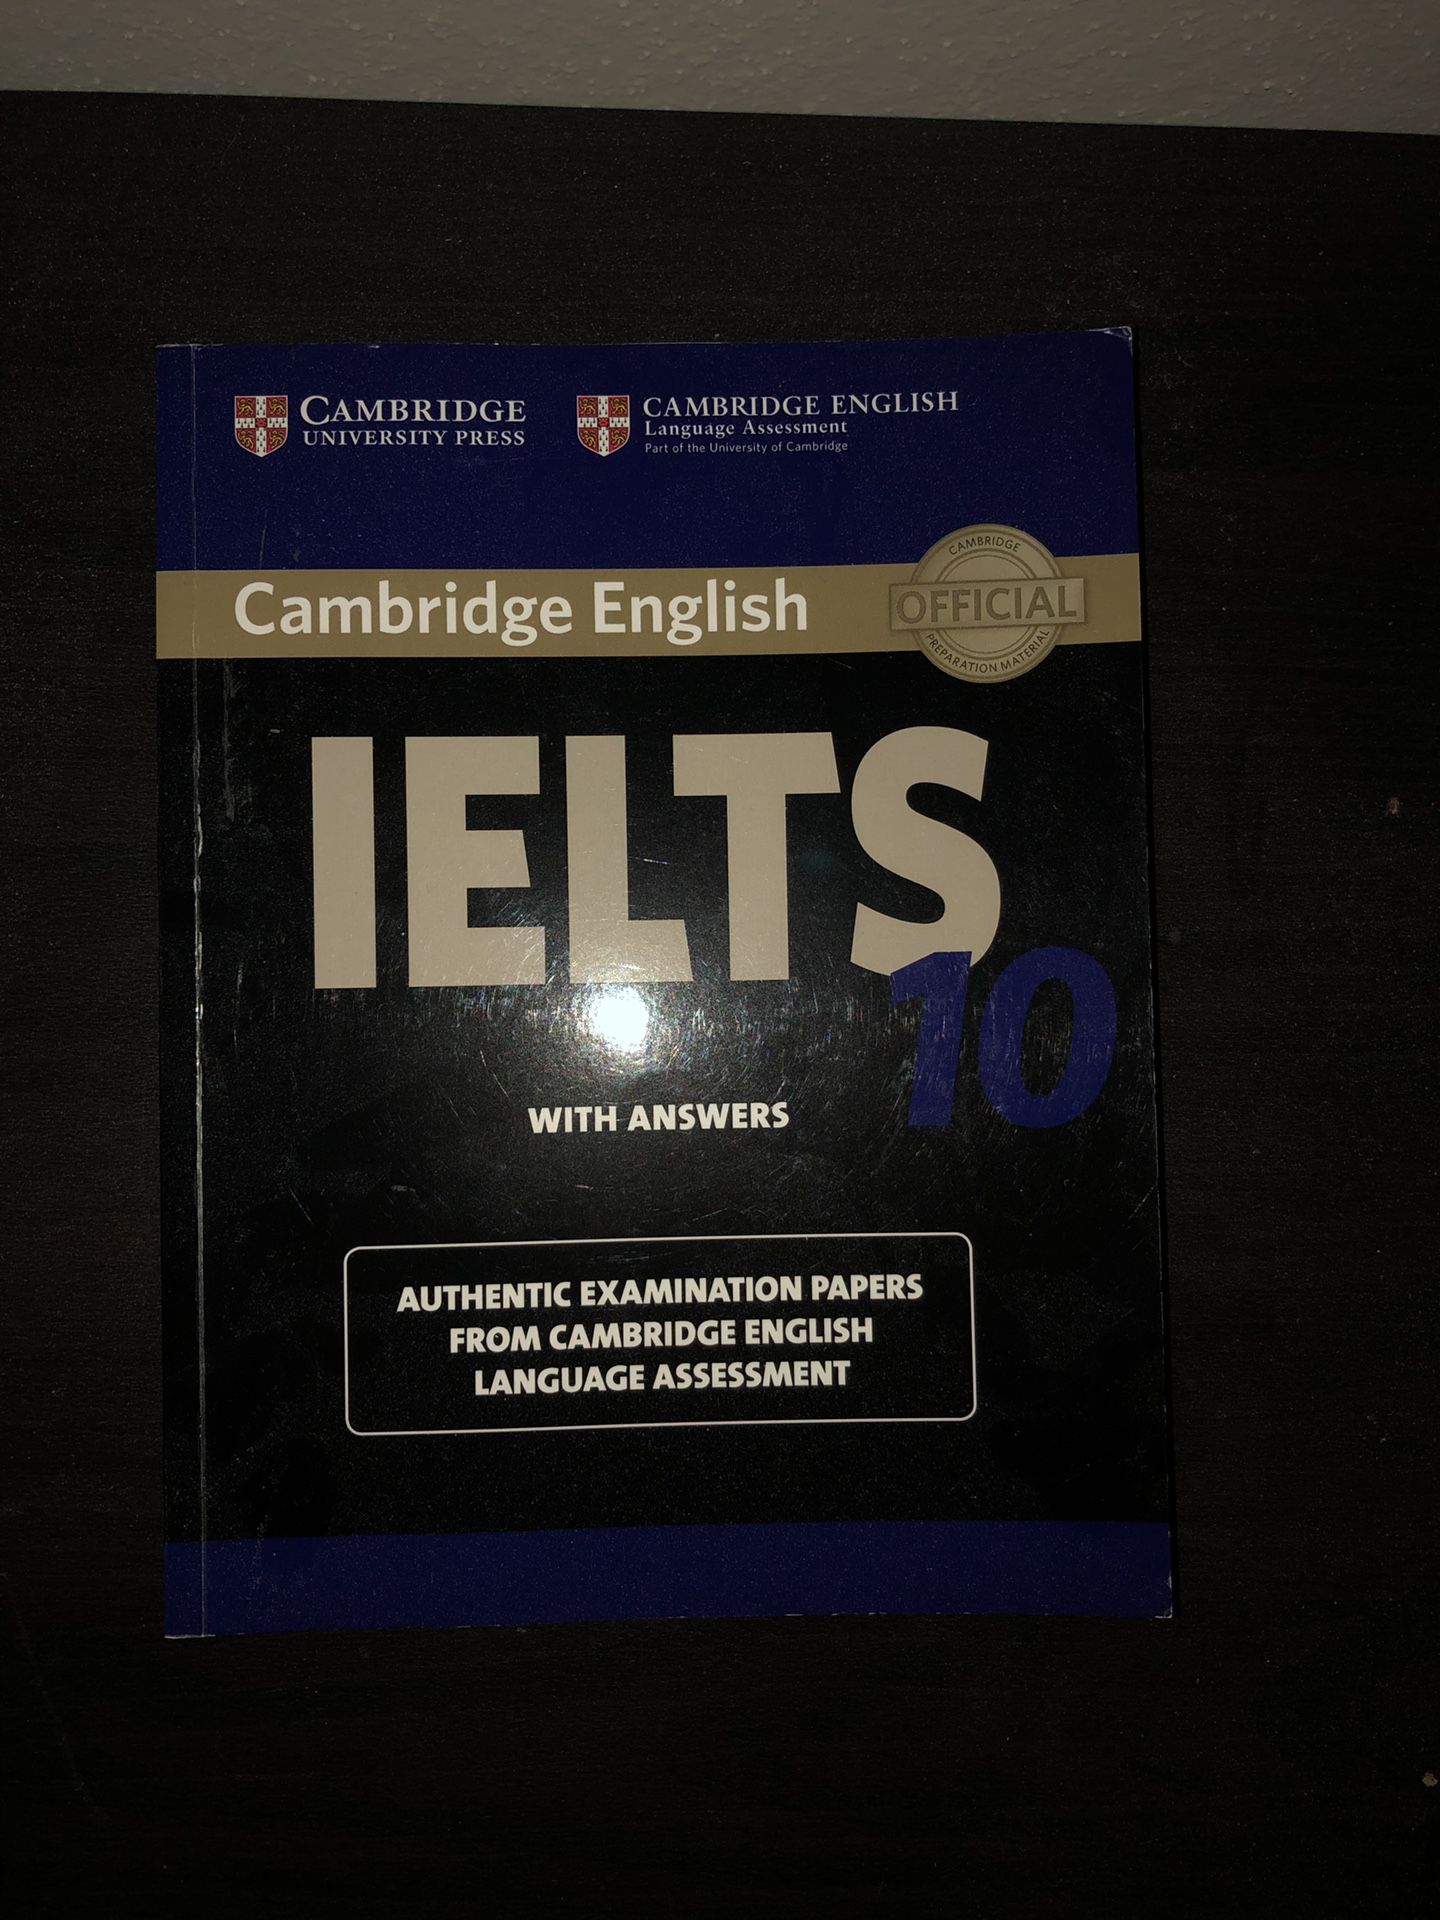 Cambridge English IELTS 10